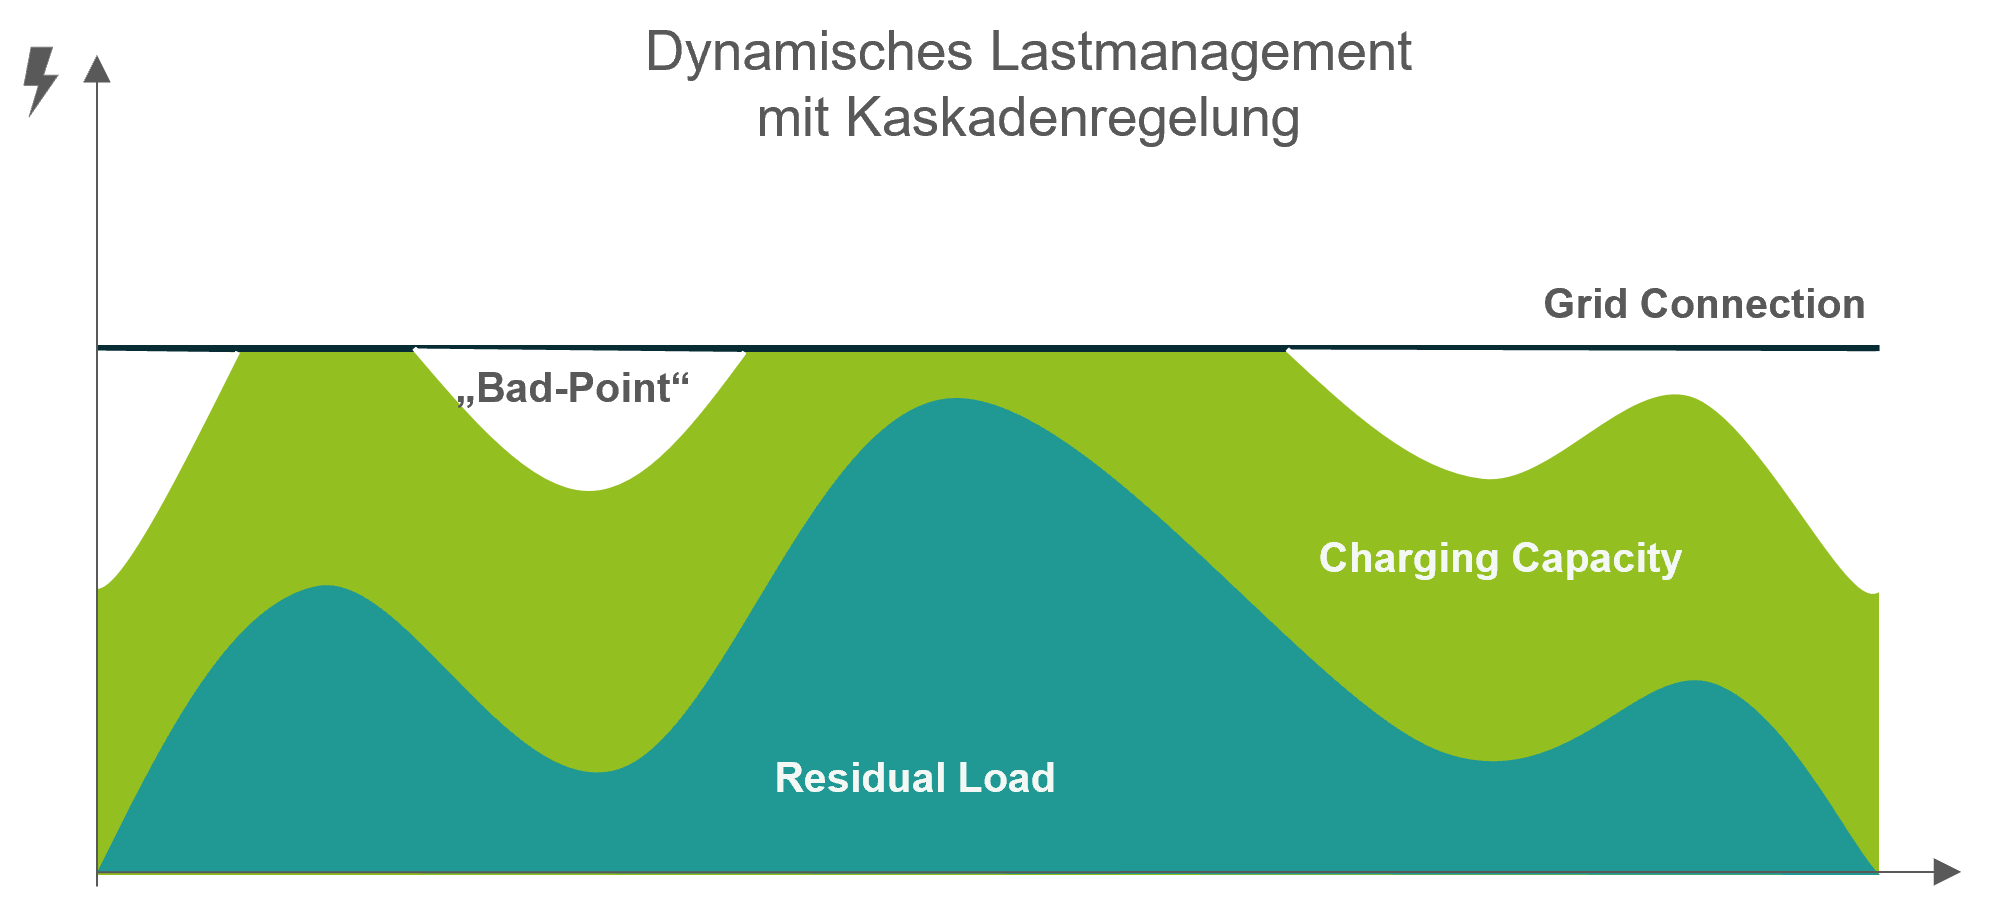 Bad point optimized load management coneva cascade